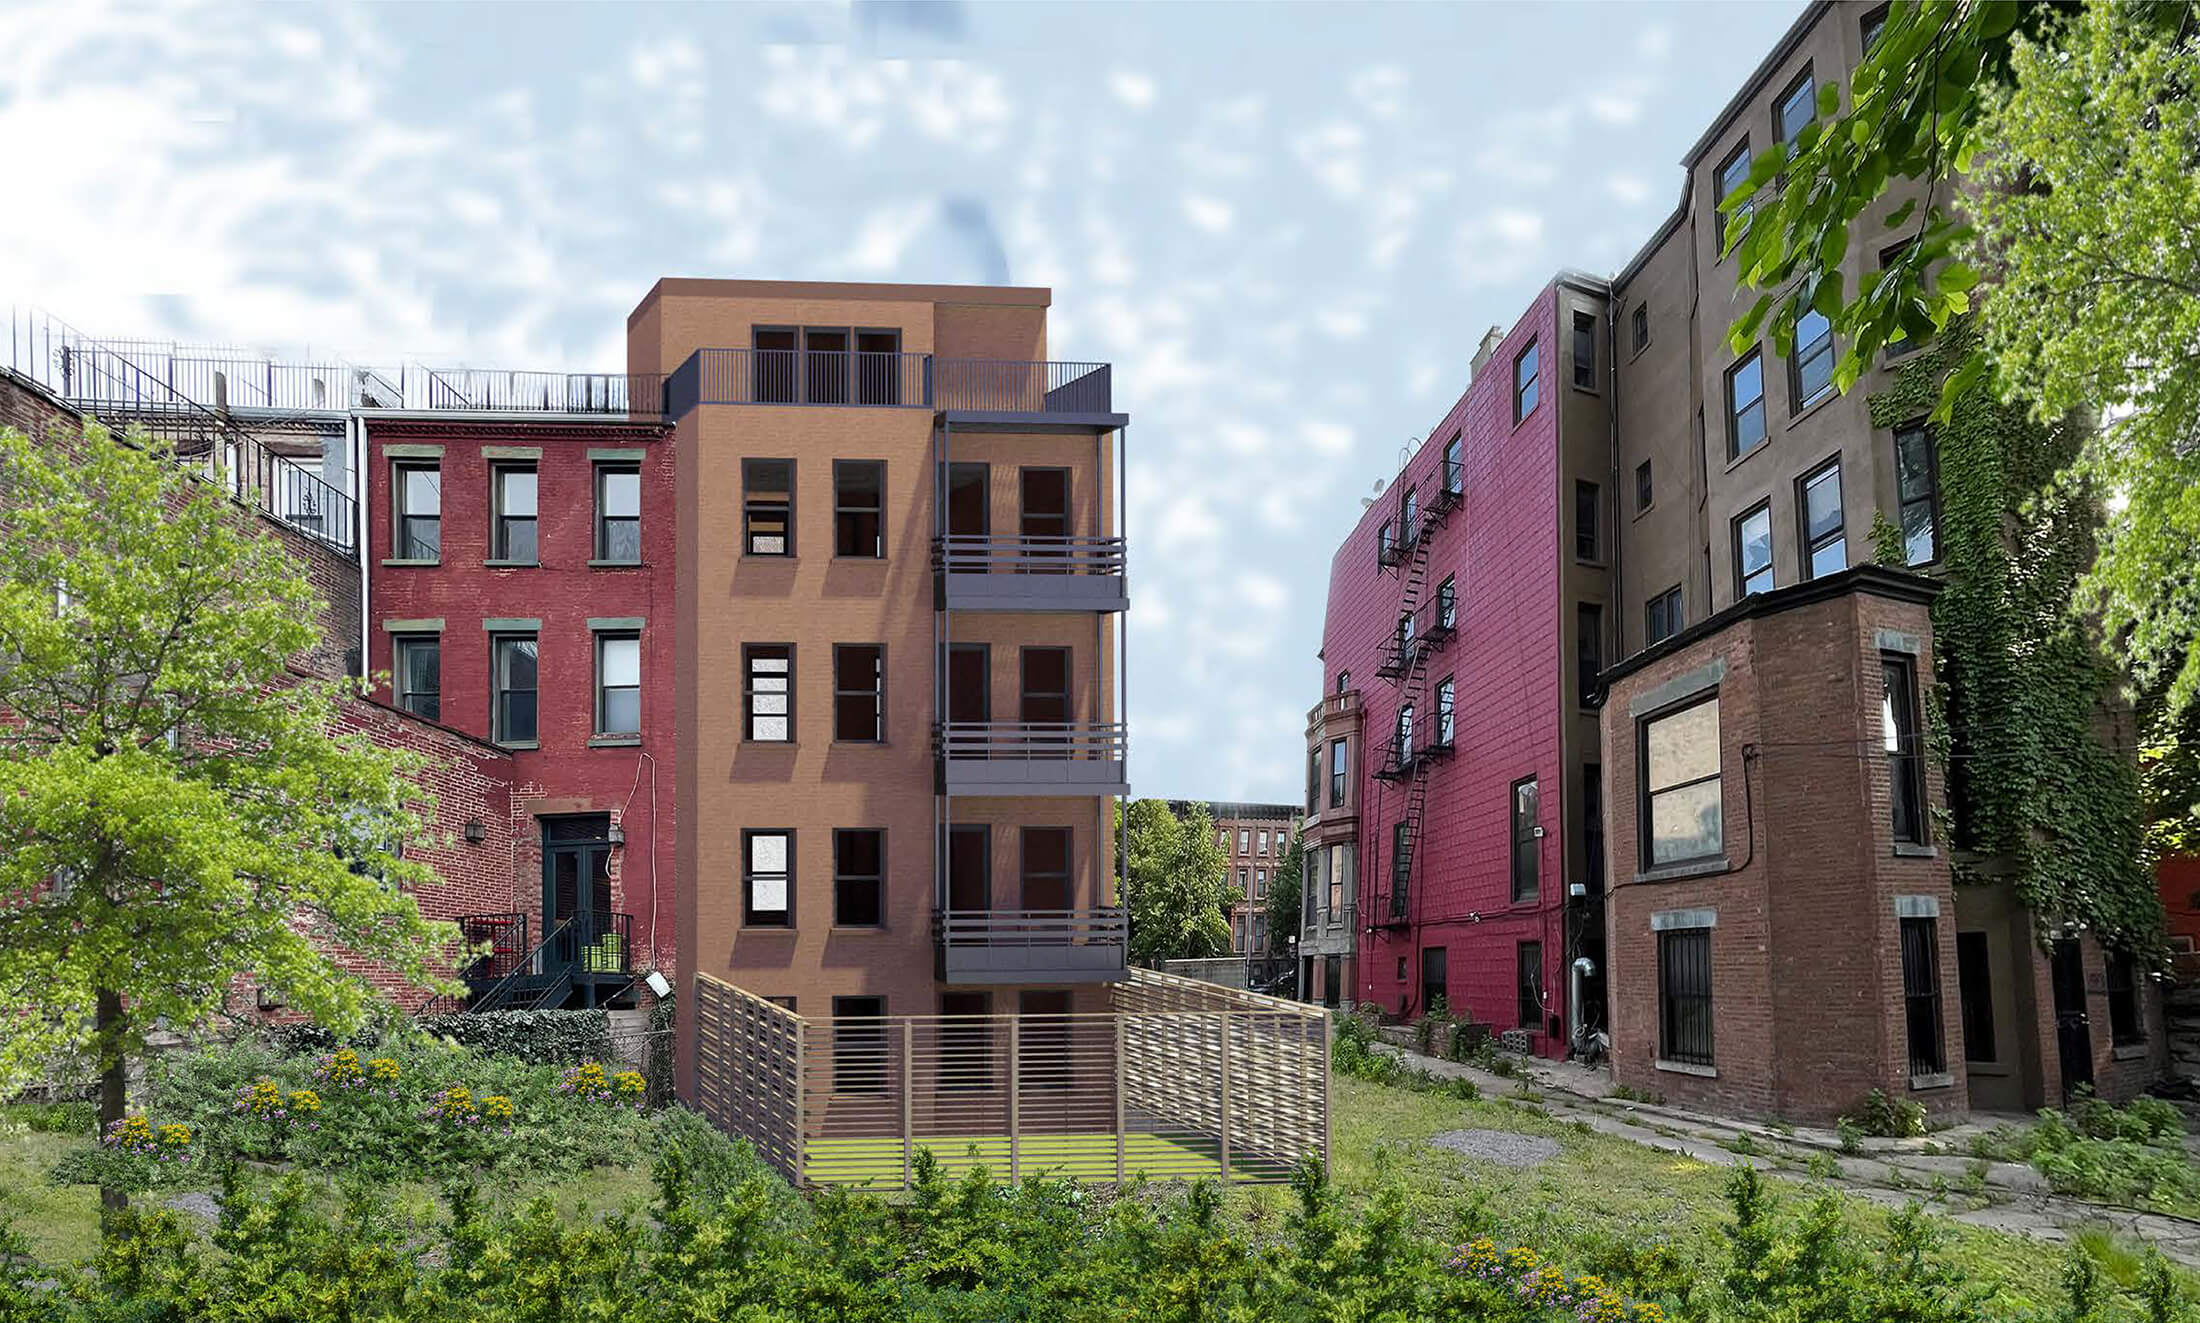 rendering showing brick building with balconies